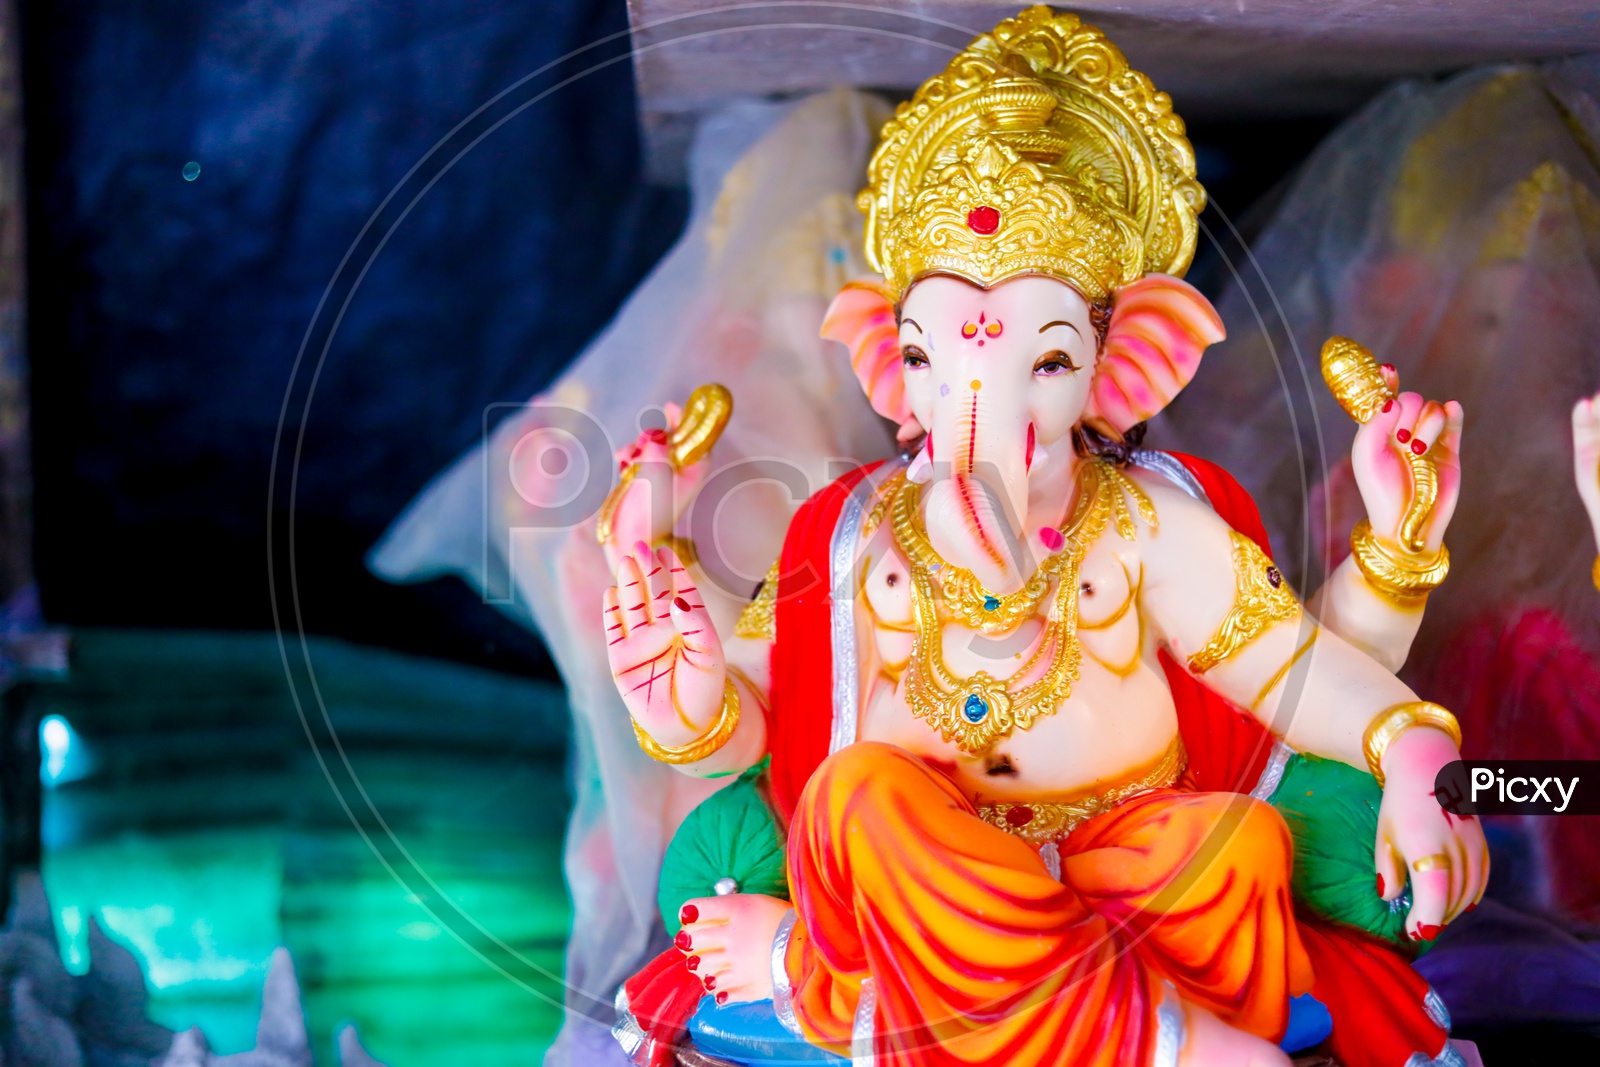 Beautiful Photograph of Lord Ganesh Idol / Ganesha Idol